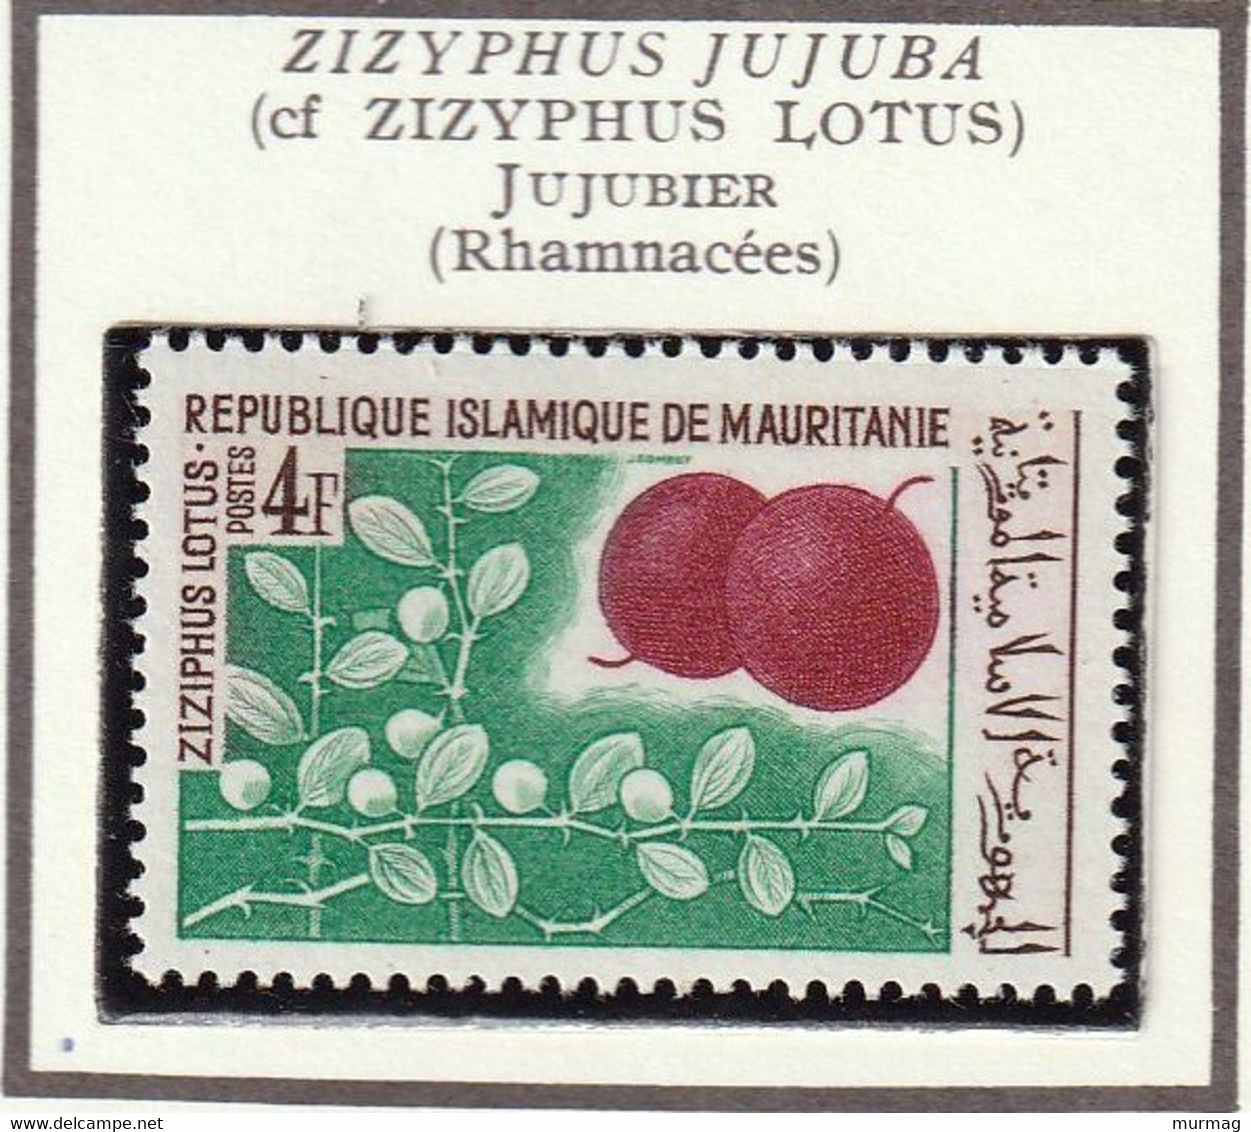 MAURITANIE - Fruits, Dattes, Jujubier, Palmier, Boabab, Dattier - Y&T N° 241-245 - 1967 - MNH - Mauritanie (1960-...)